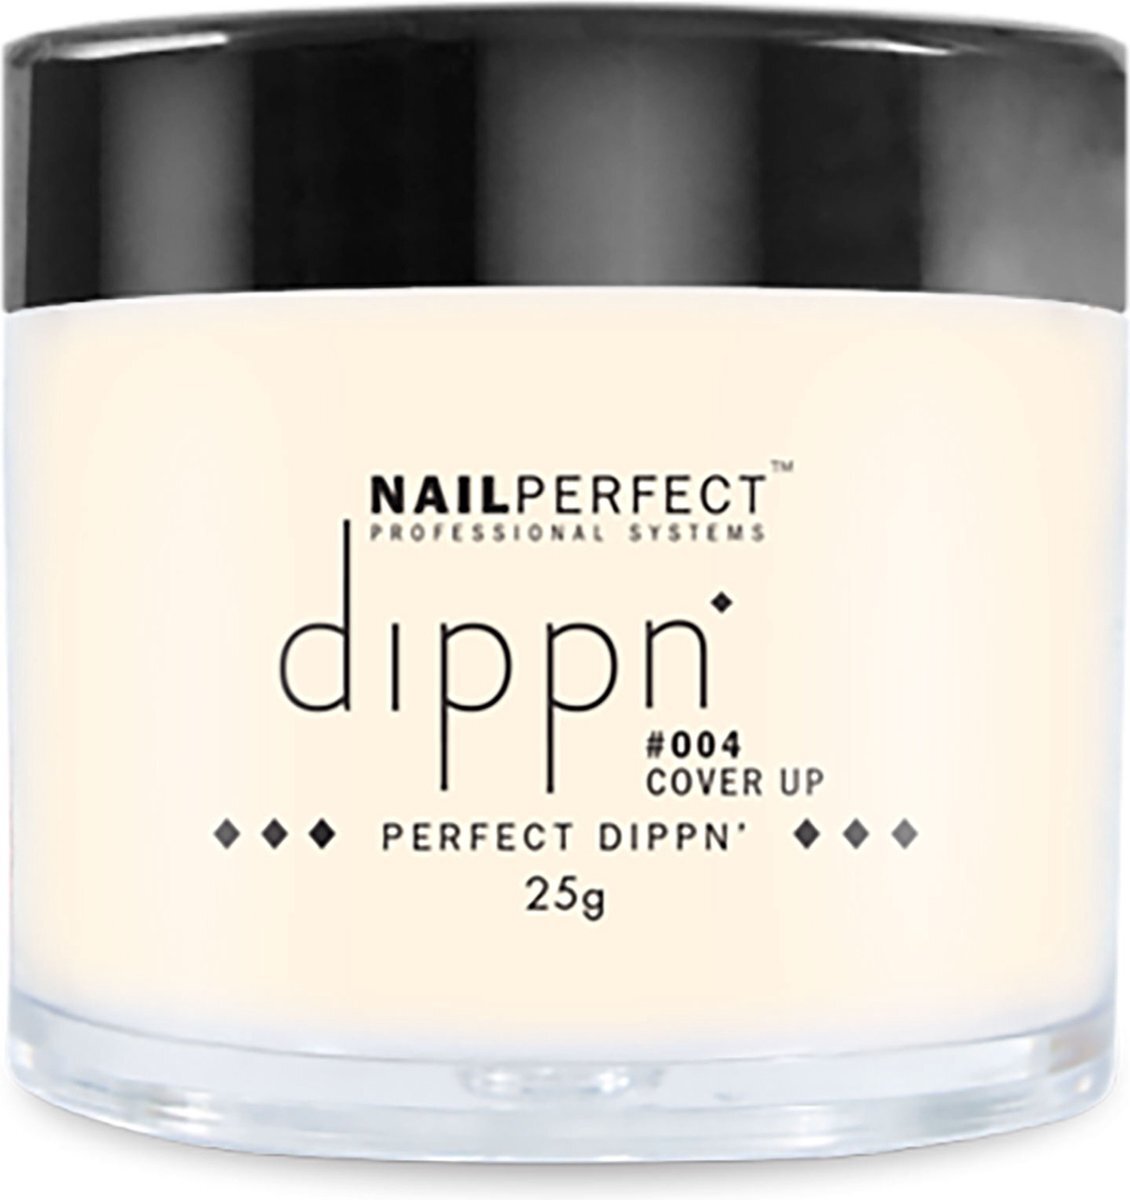 Nailperfect Nail Perfect - Dippn - #004 Cover Up - 25gr